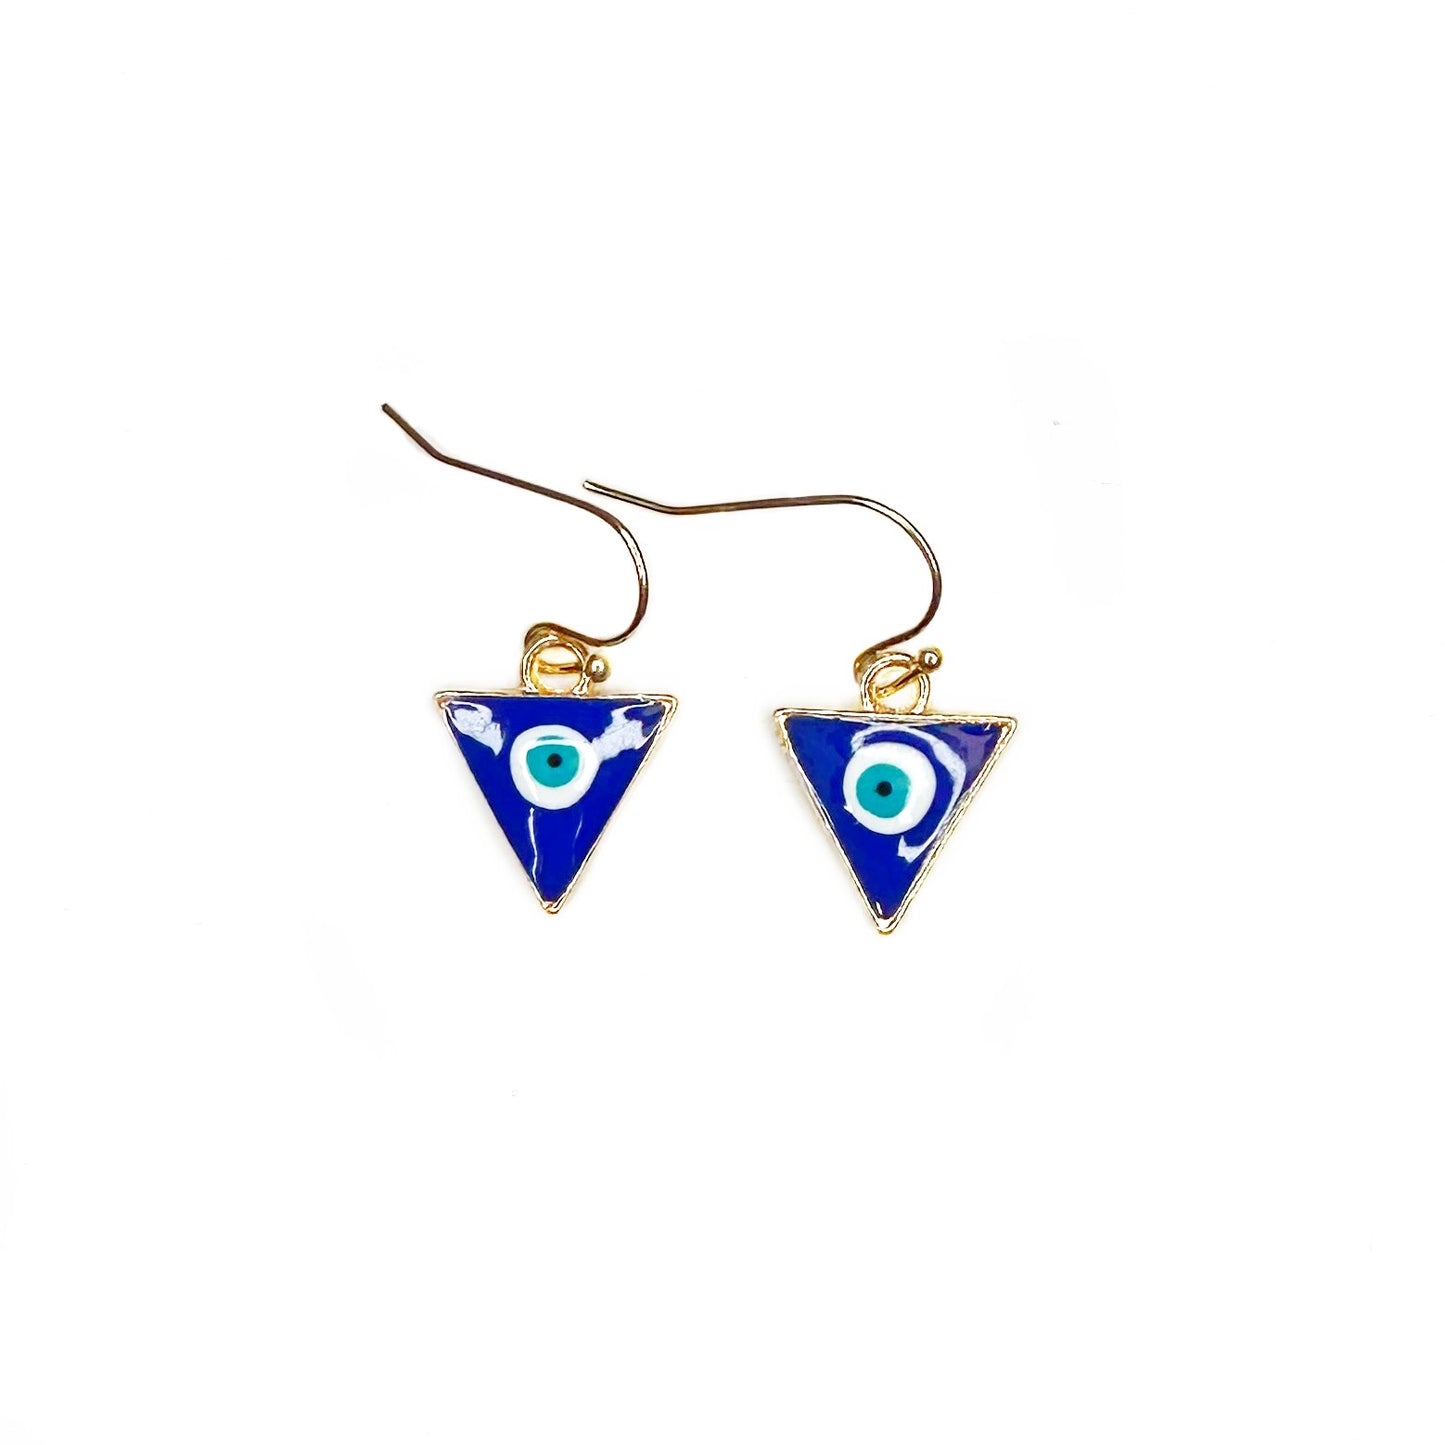 Evil Eye Triangle Dangle Earrings